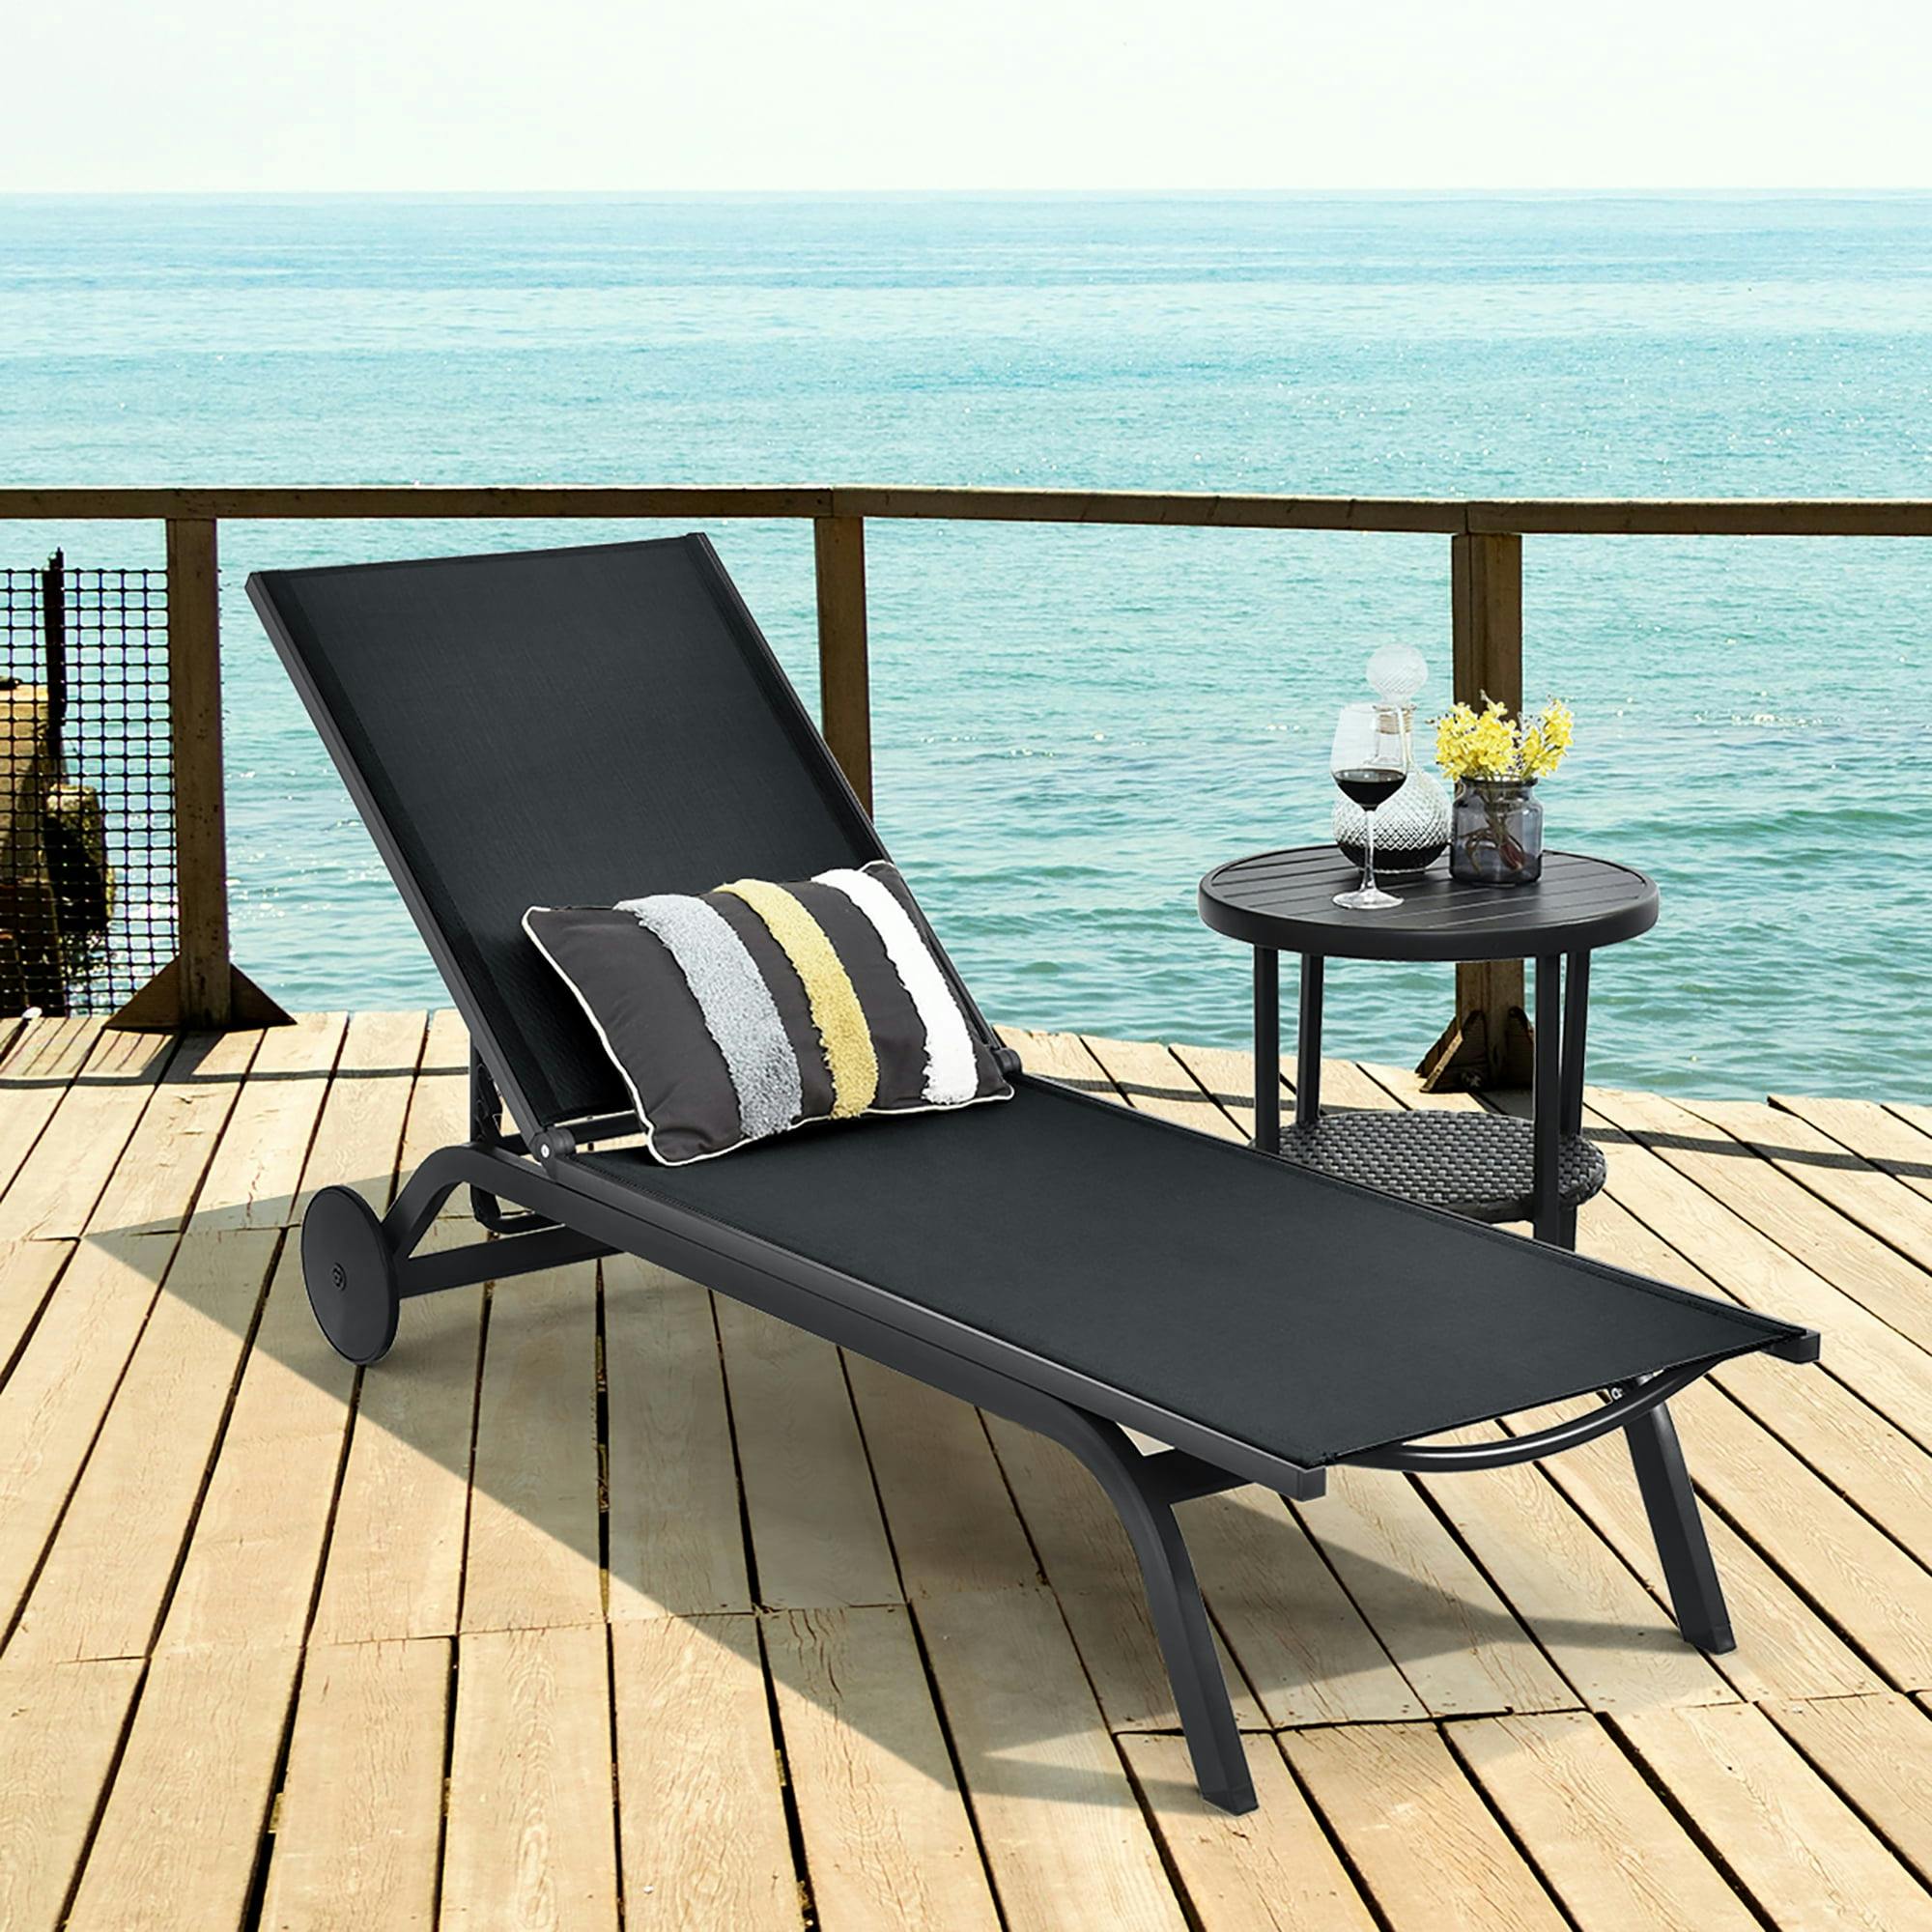 Sleek Black Aluminum Outdoor Chaise Lounge with Adjustable Backrest